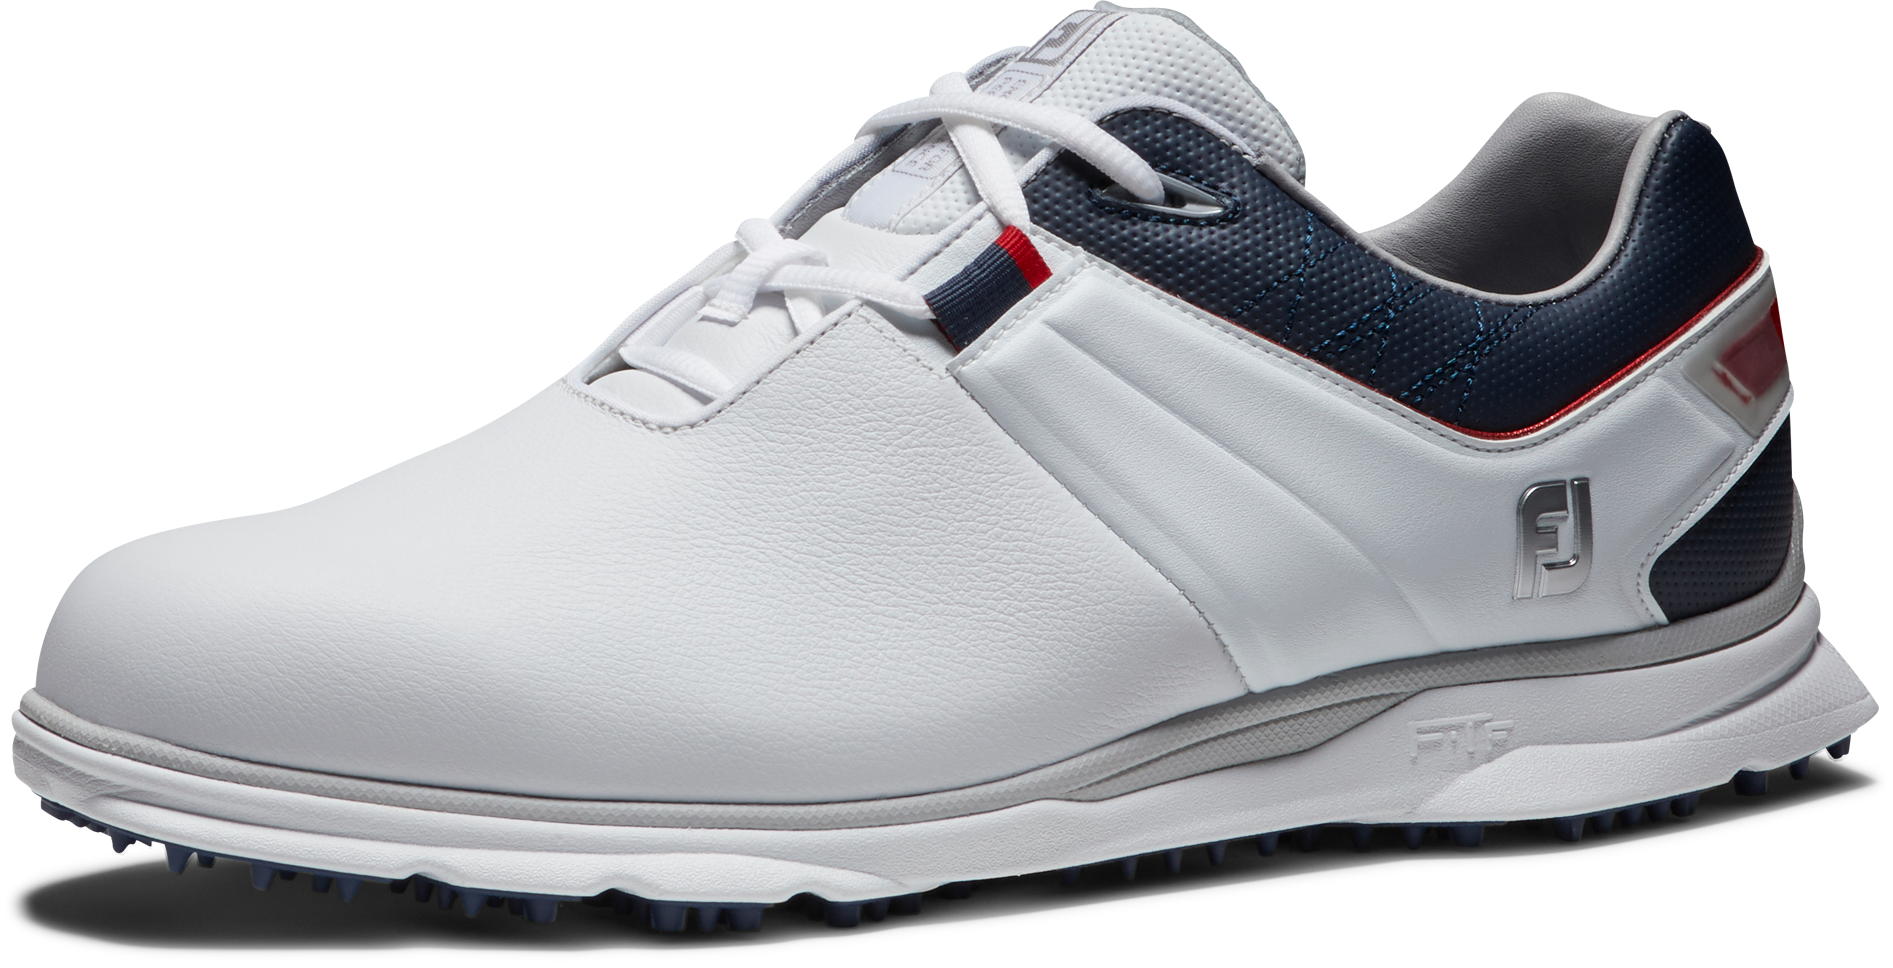 FootJoy Pro/SL Golfschuh, M, white/navy/red